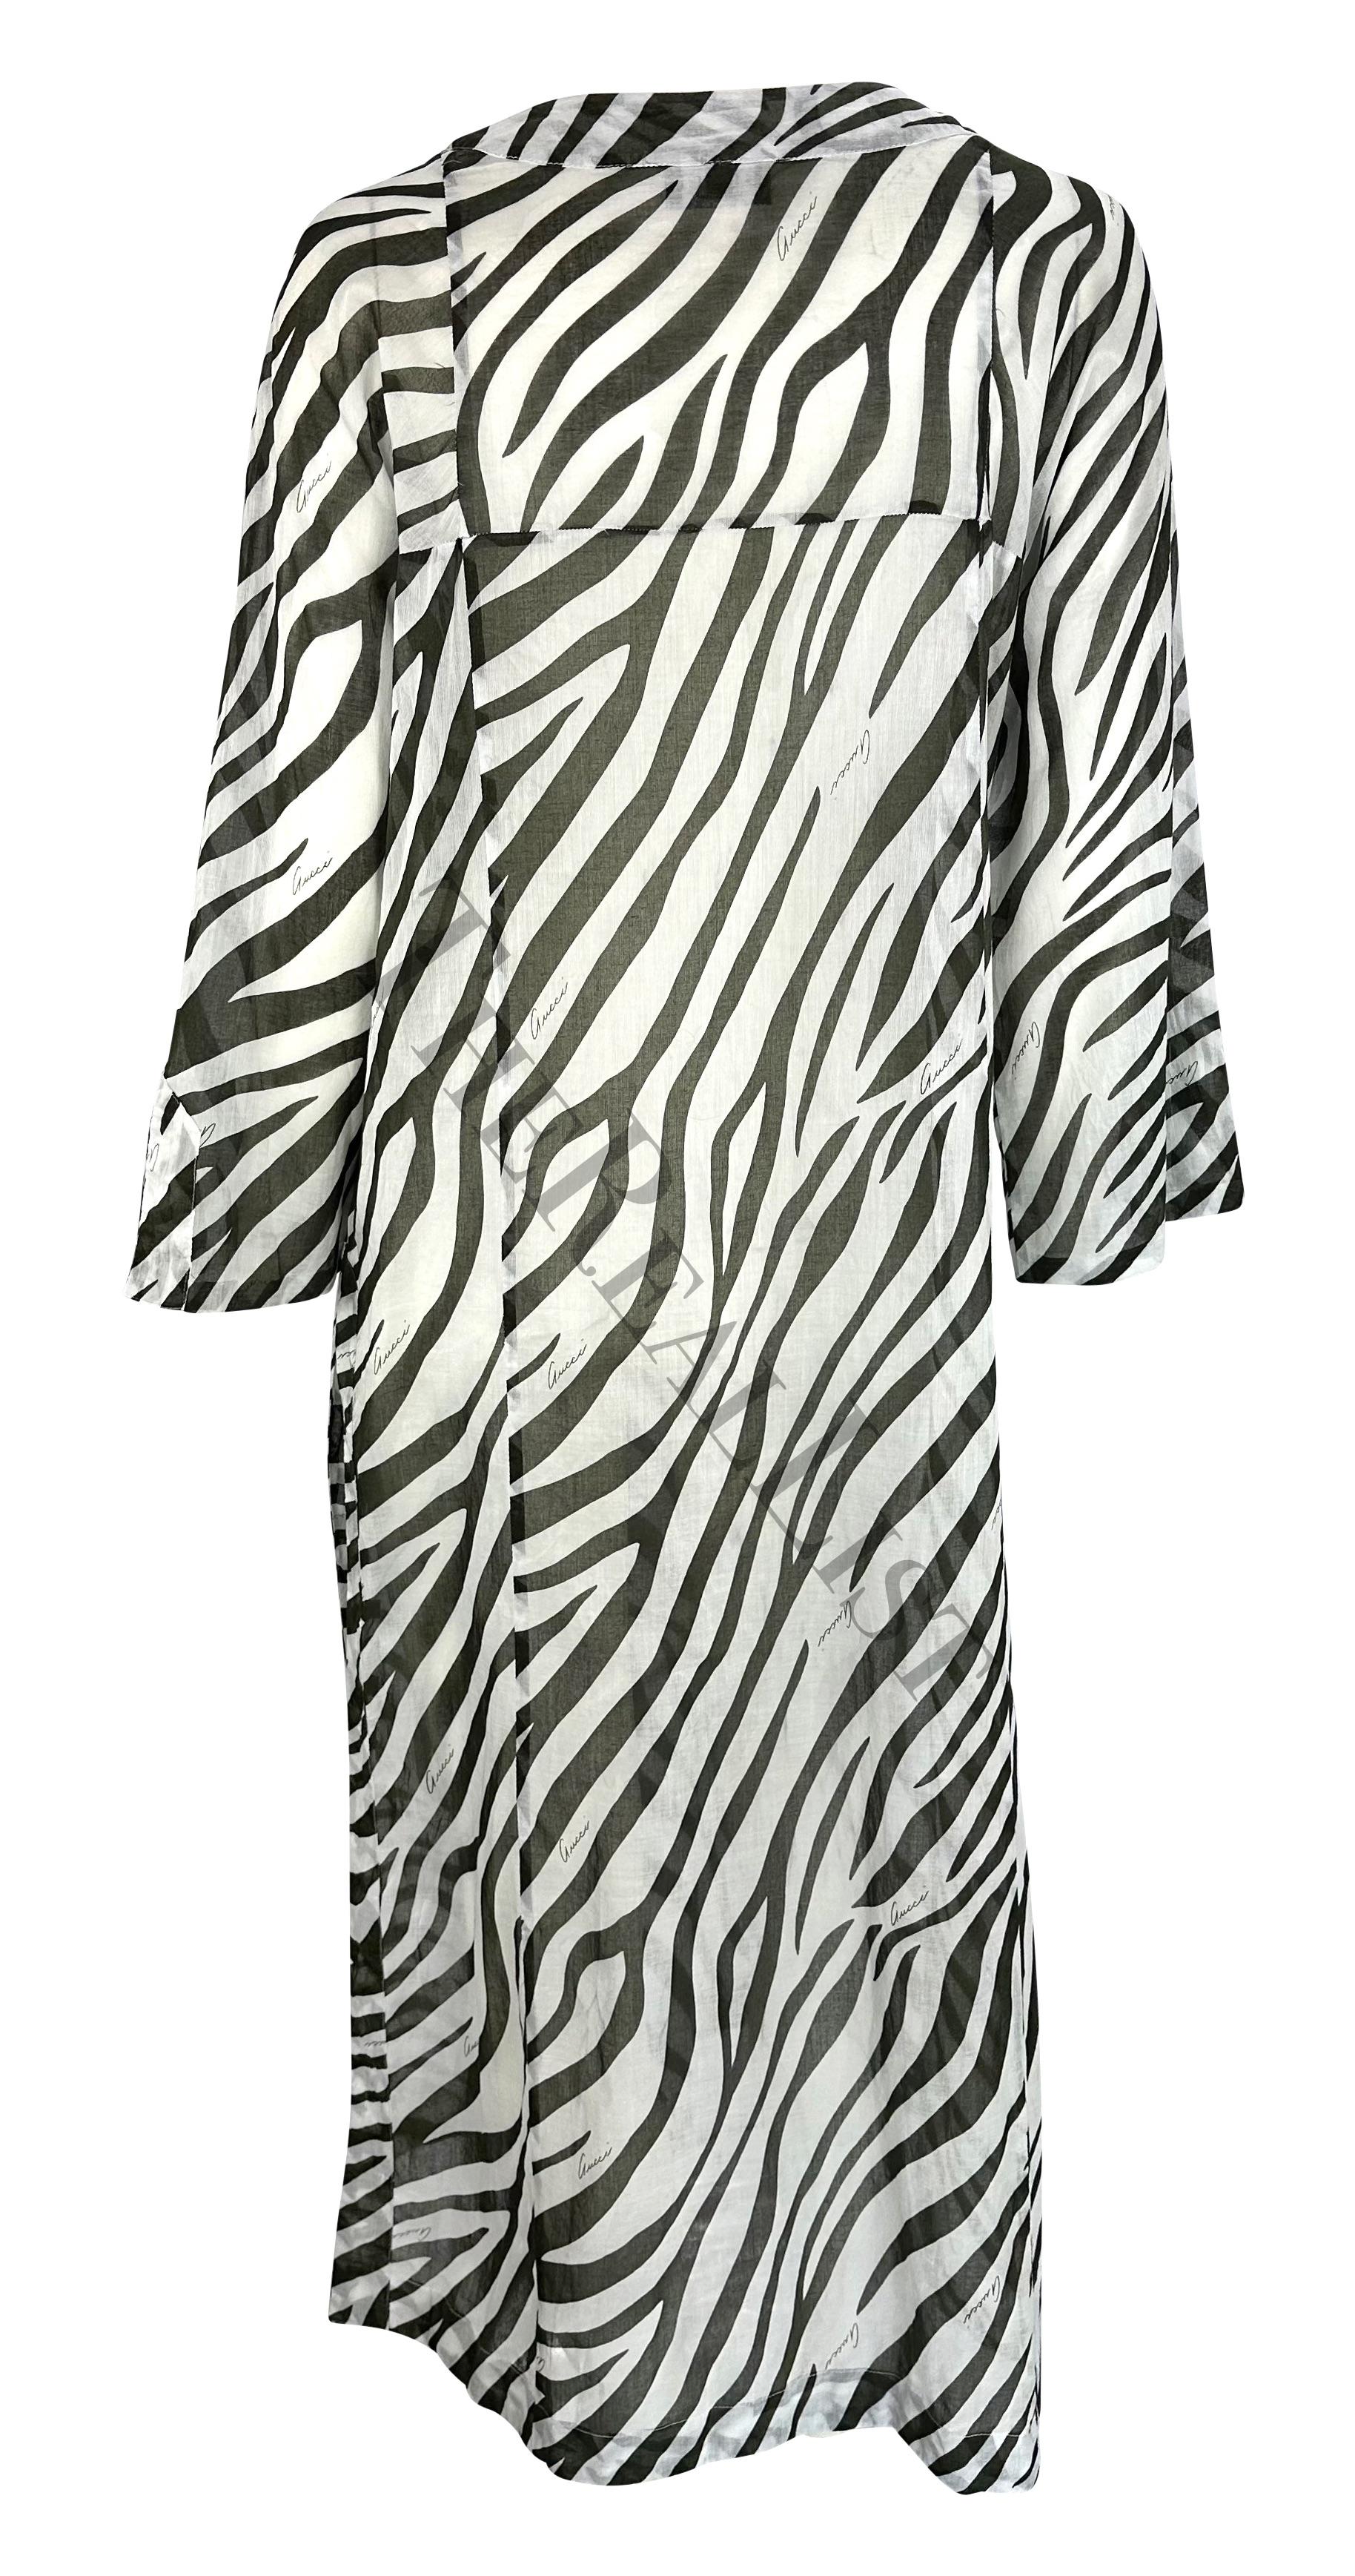 S/S 1996 Gucci by Tom Ford Runway Black White Zebra Print Sheer Kaftan Dress For Sale 4